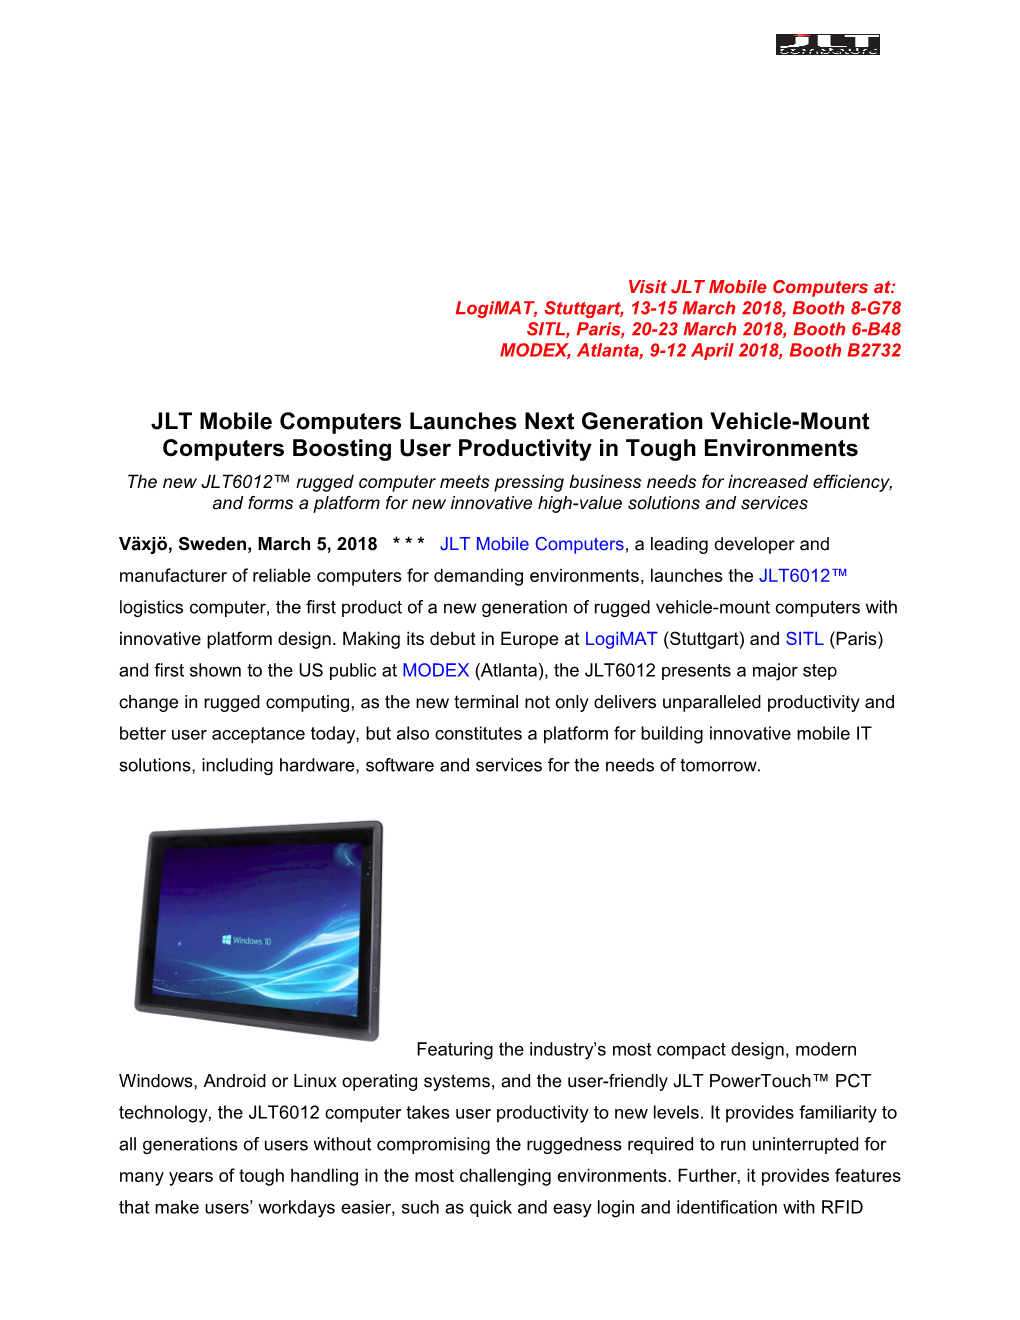 JLT Mobile Computers Press Release